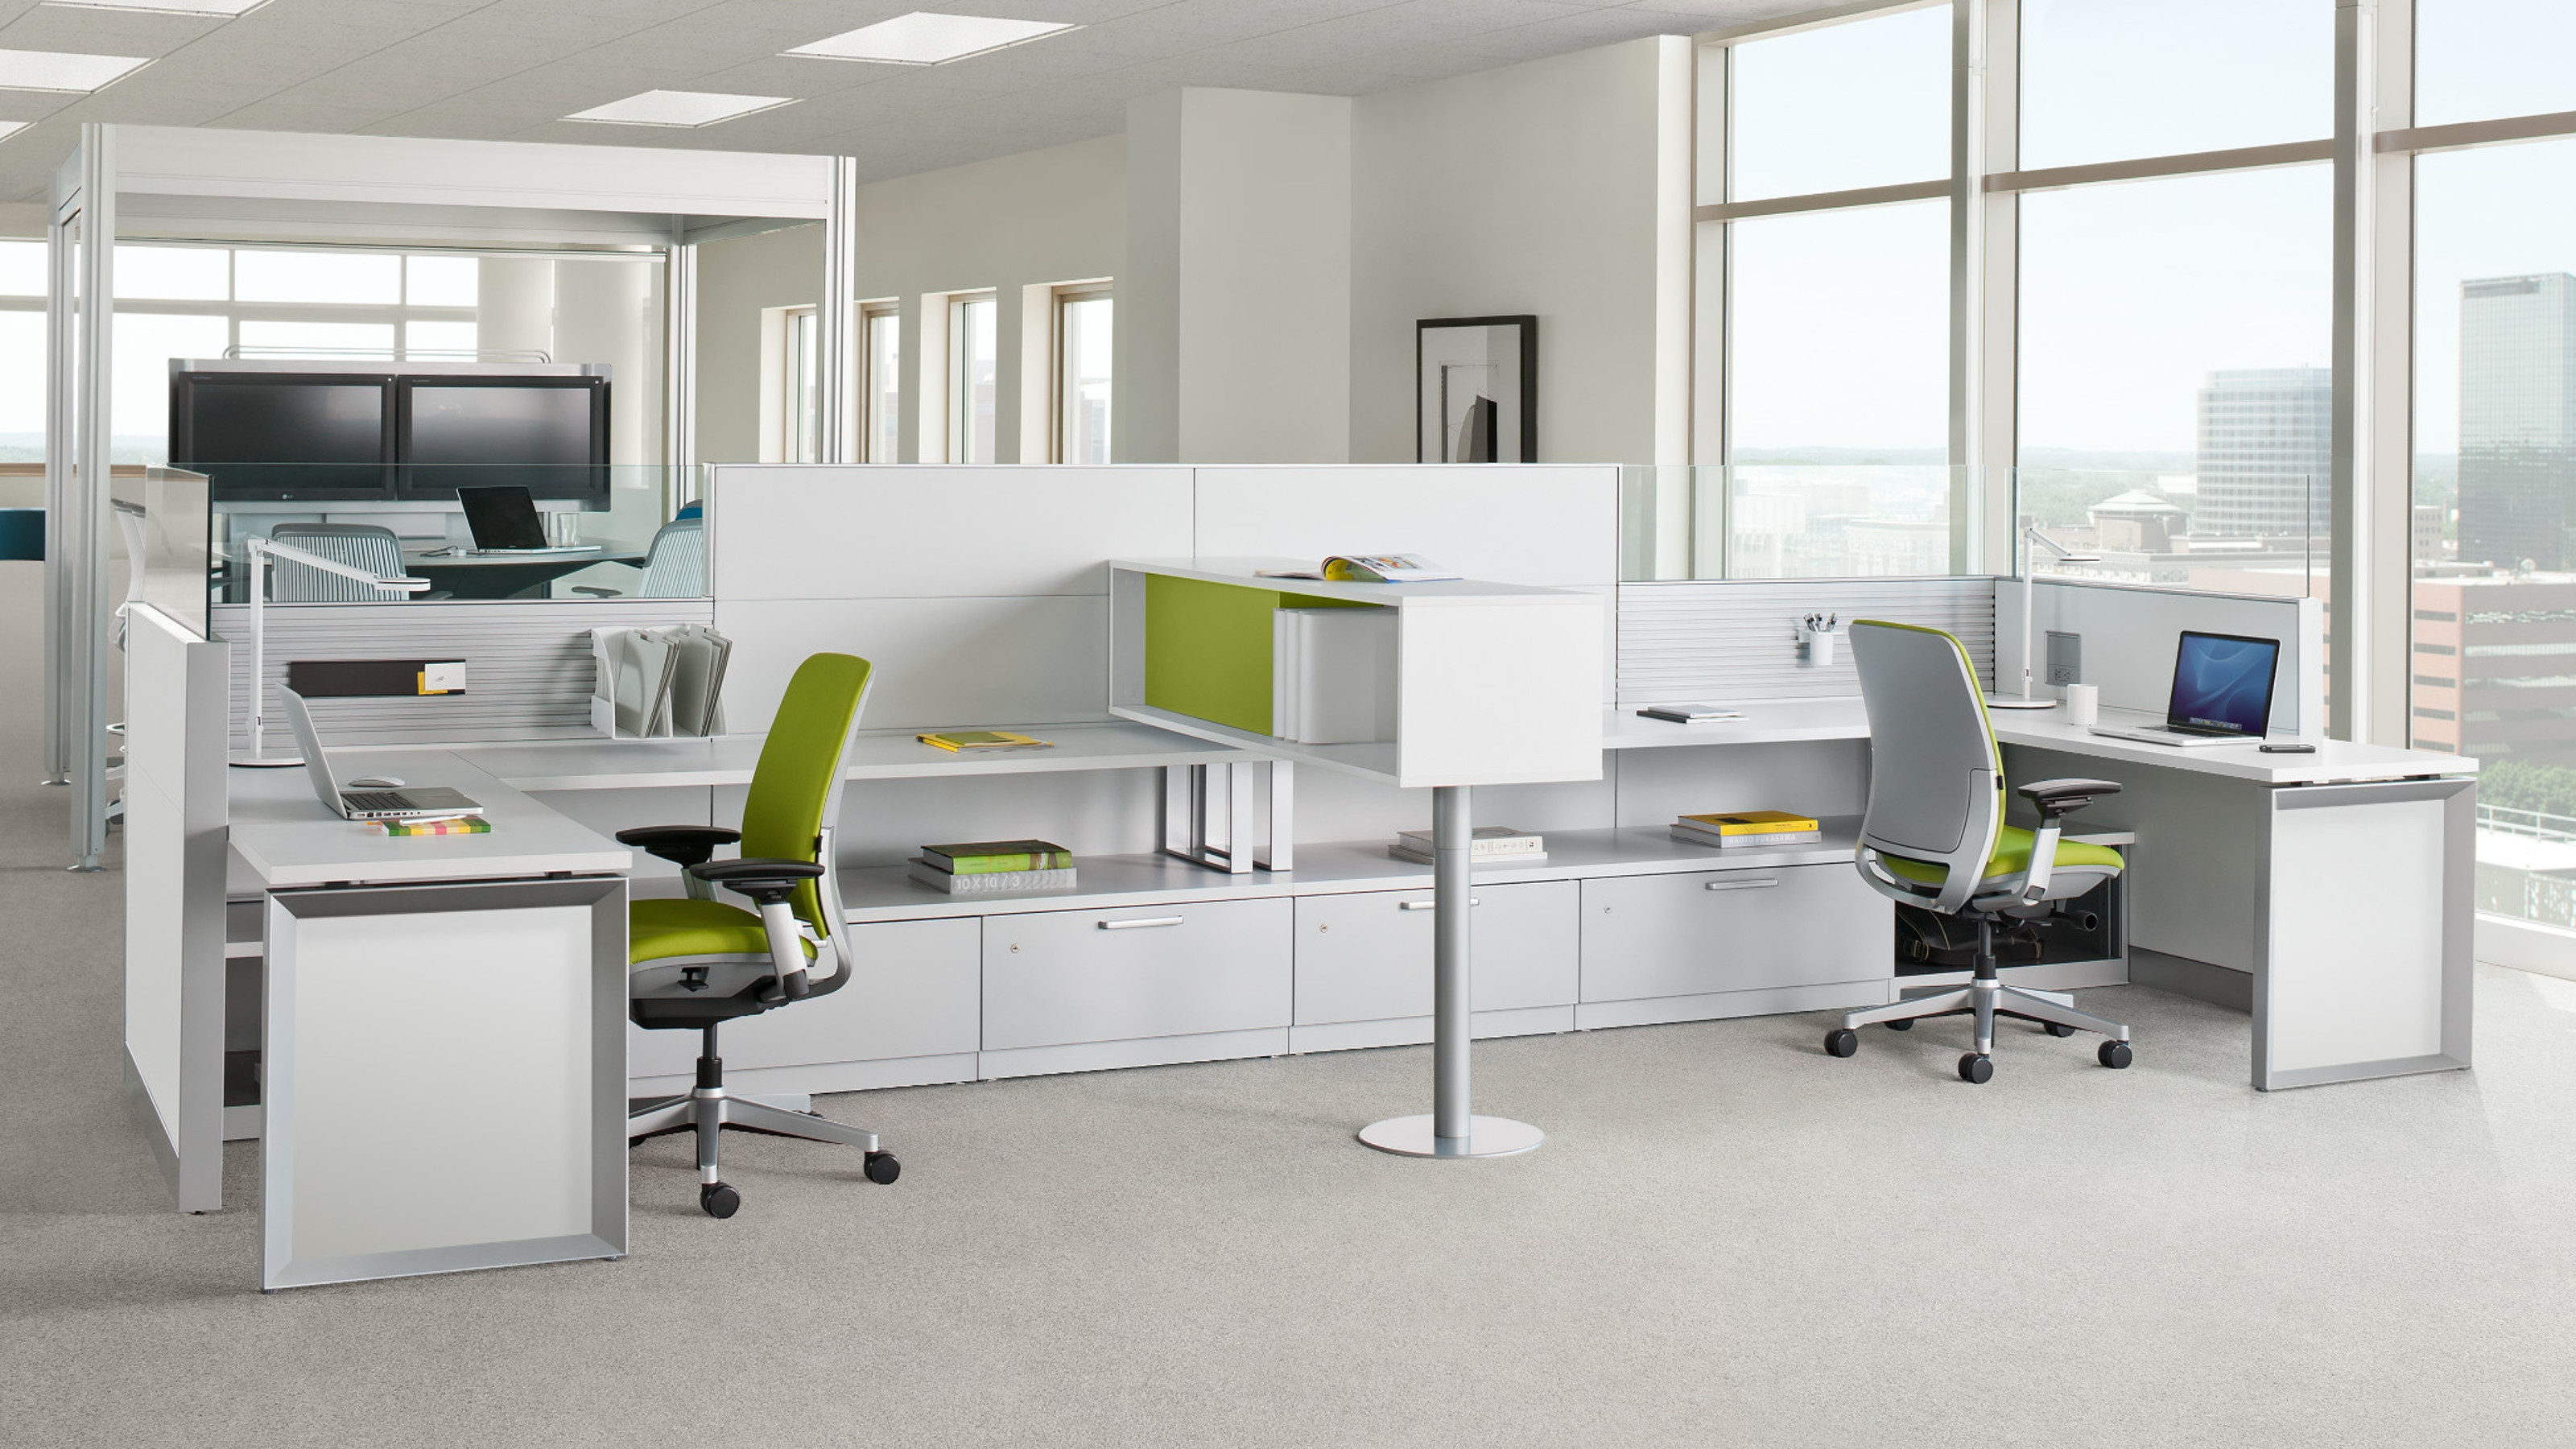 Best ideas about Modular Office Furniture
. Save or Pin Modular fice Furniture Cubicles richfielduniversity Now.